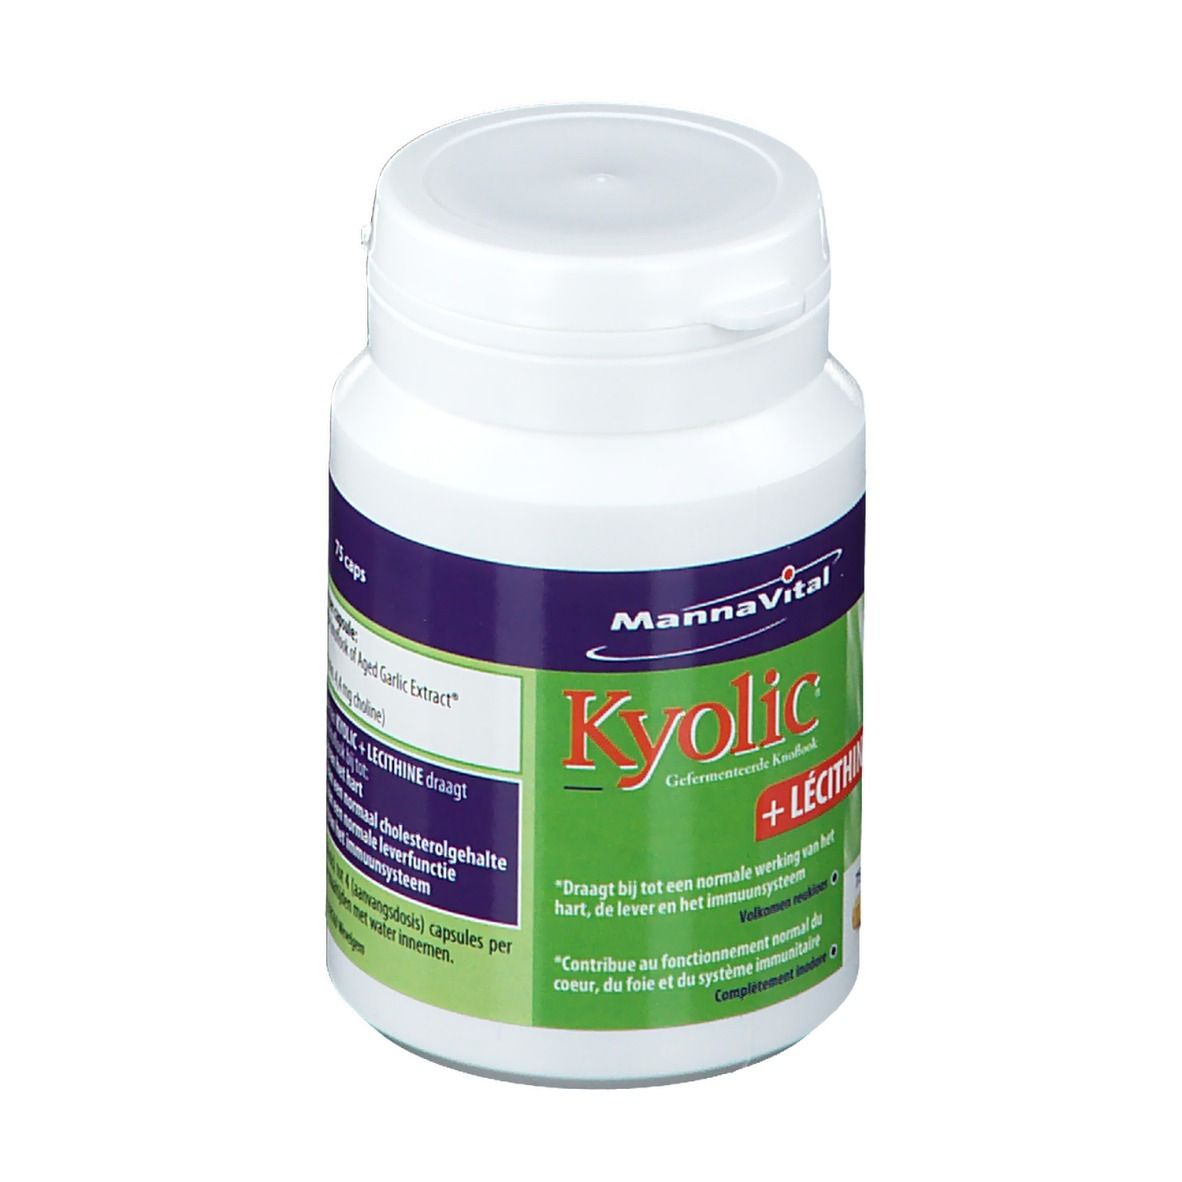 Mannavital Kyolic + Lecithine